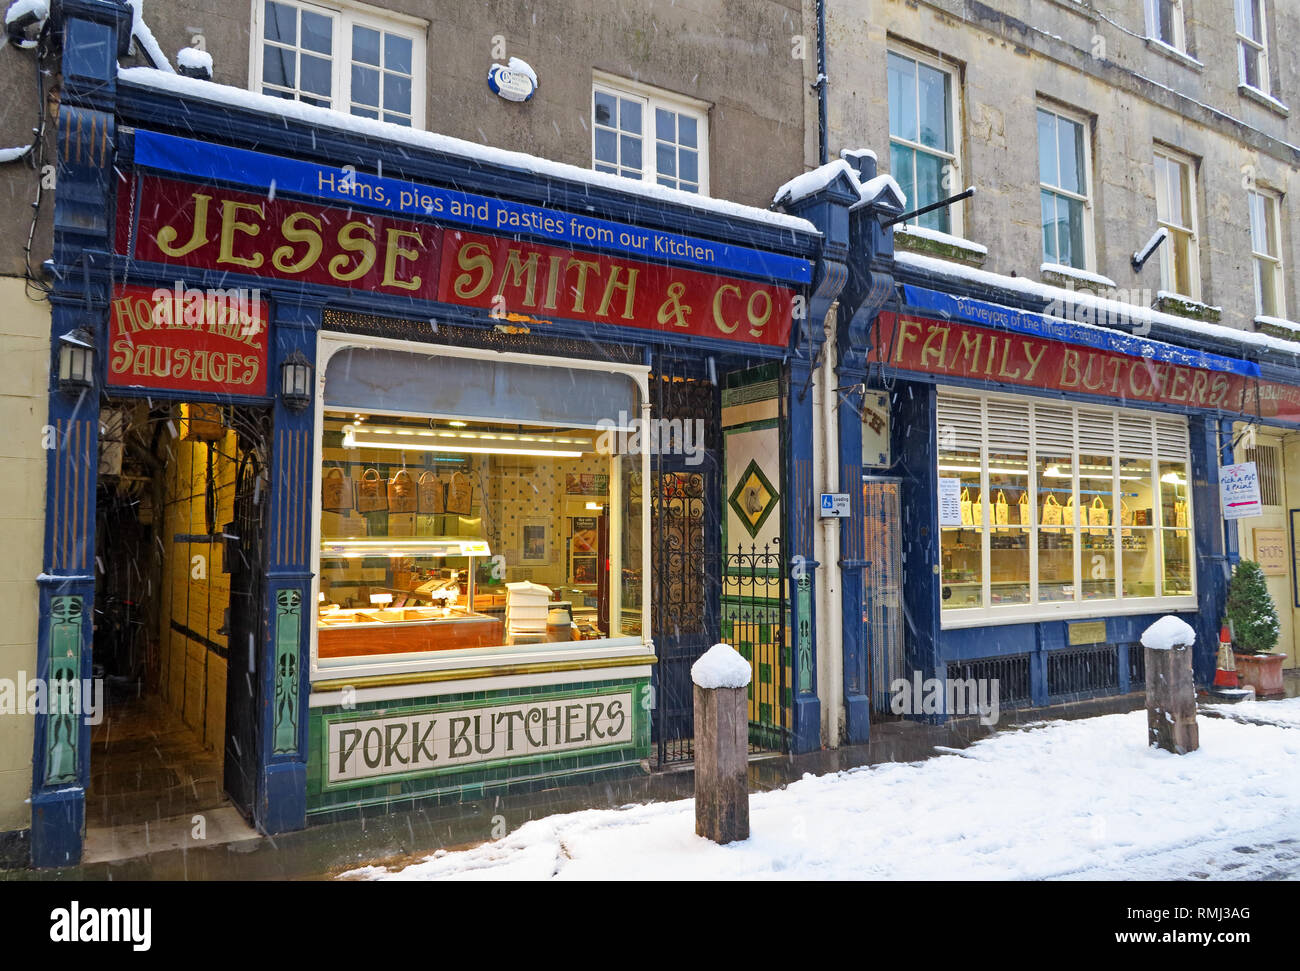 Winter snow Cirencester town centre, Jesse Smith Pork Butchers, 14 Black Jack Street, Gloucestershire, South West England, UK Stock Photo